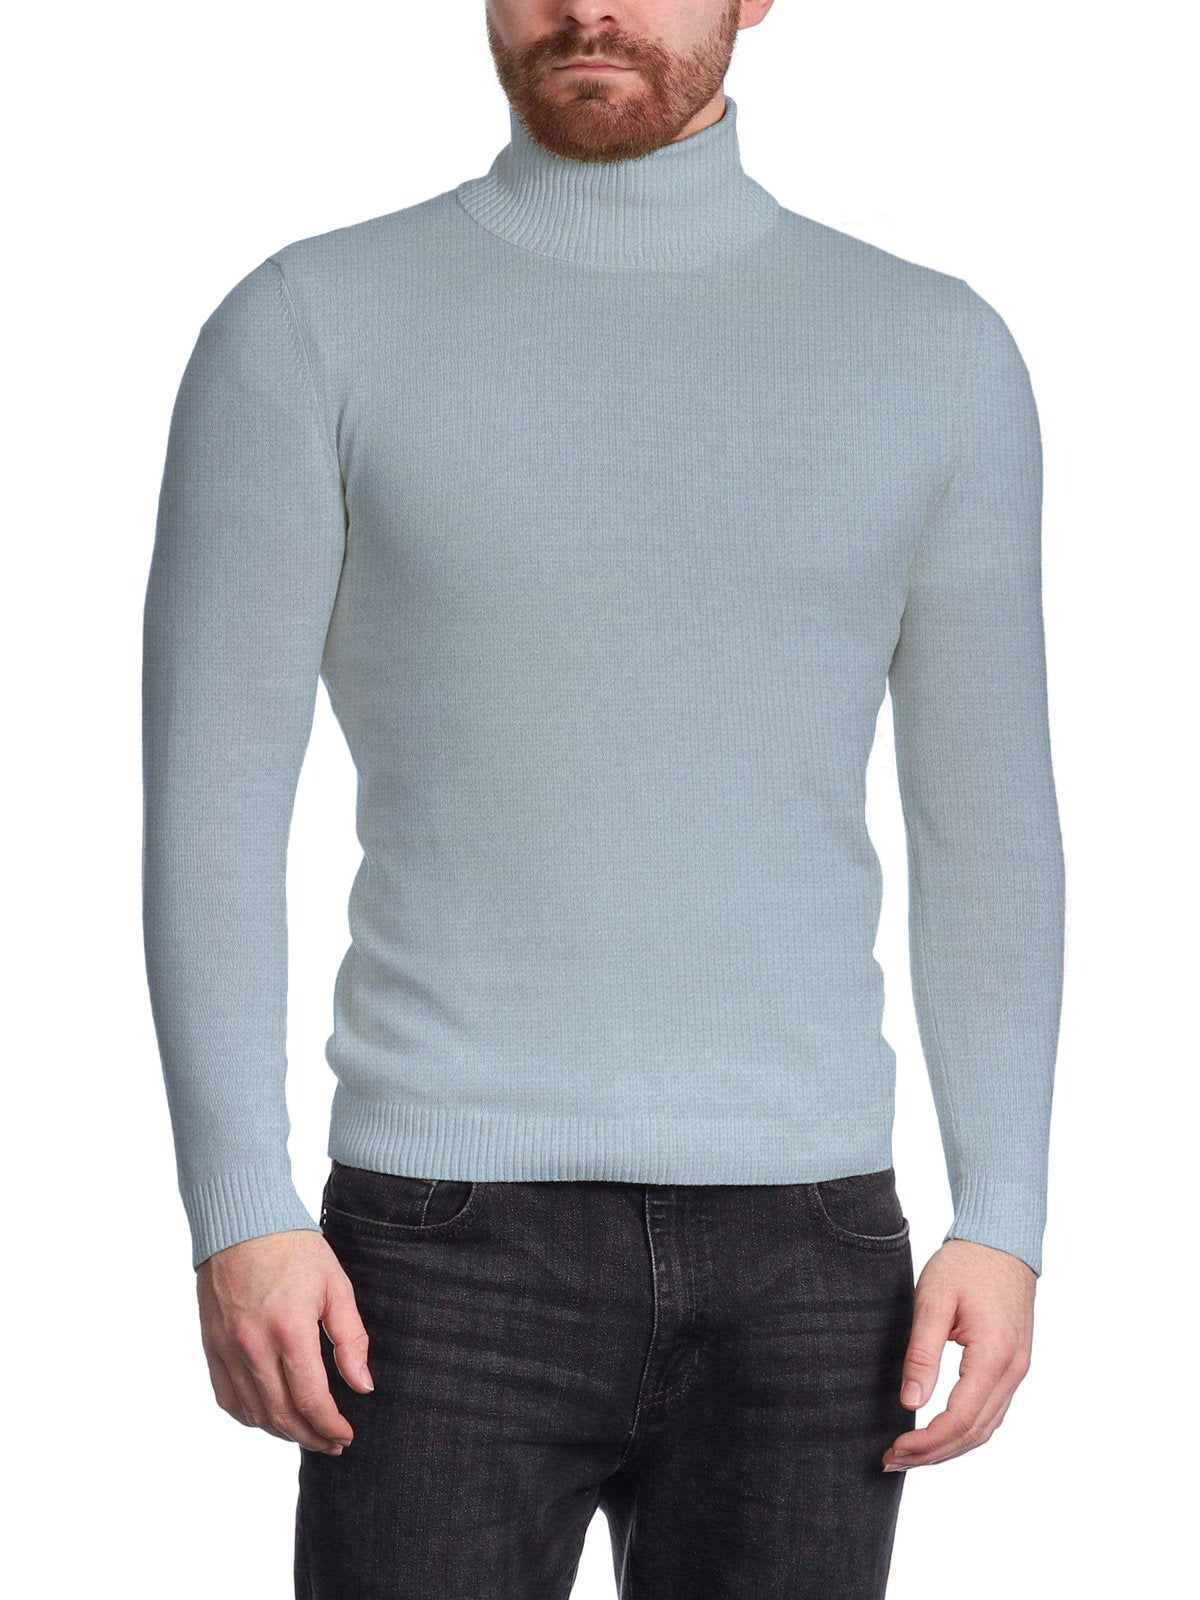 Arthur Black Men\'s Solid Light Blue Pullover Cotton Blend Turtleneck  Sweater | The Suit Depot